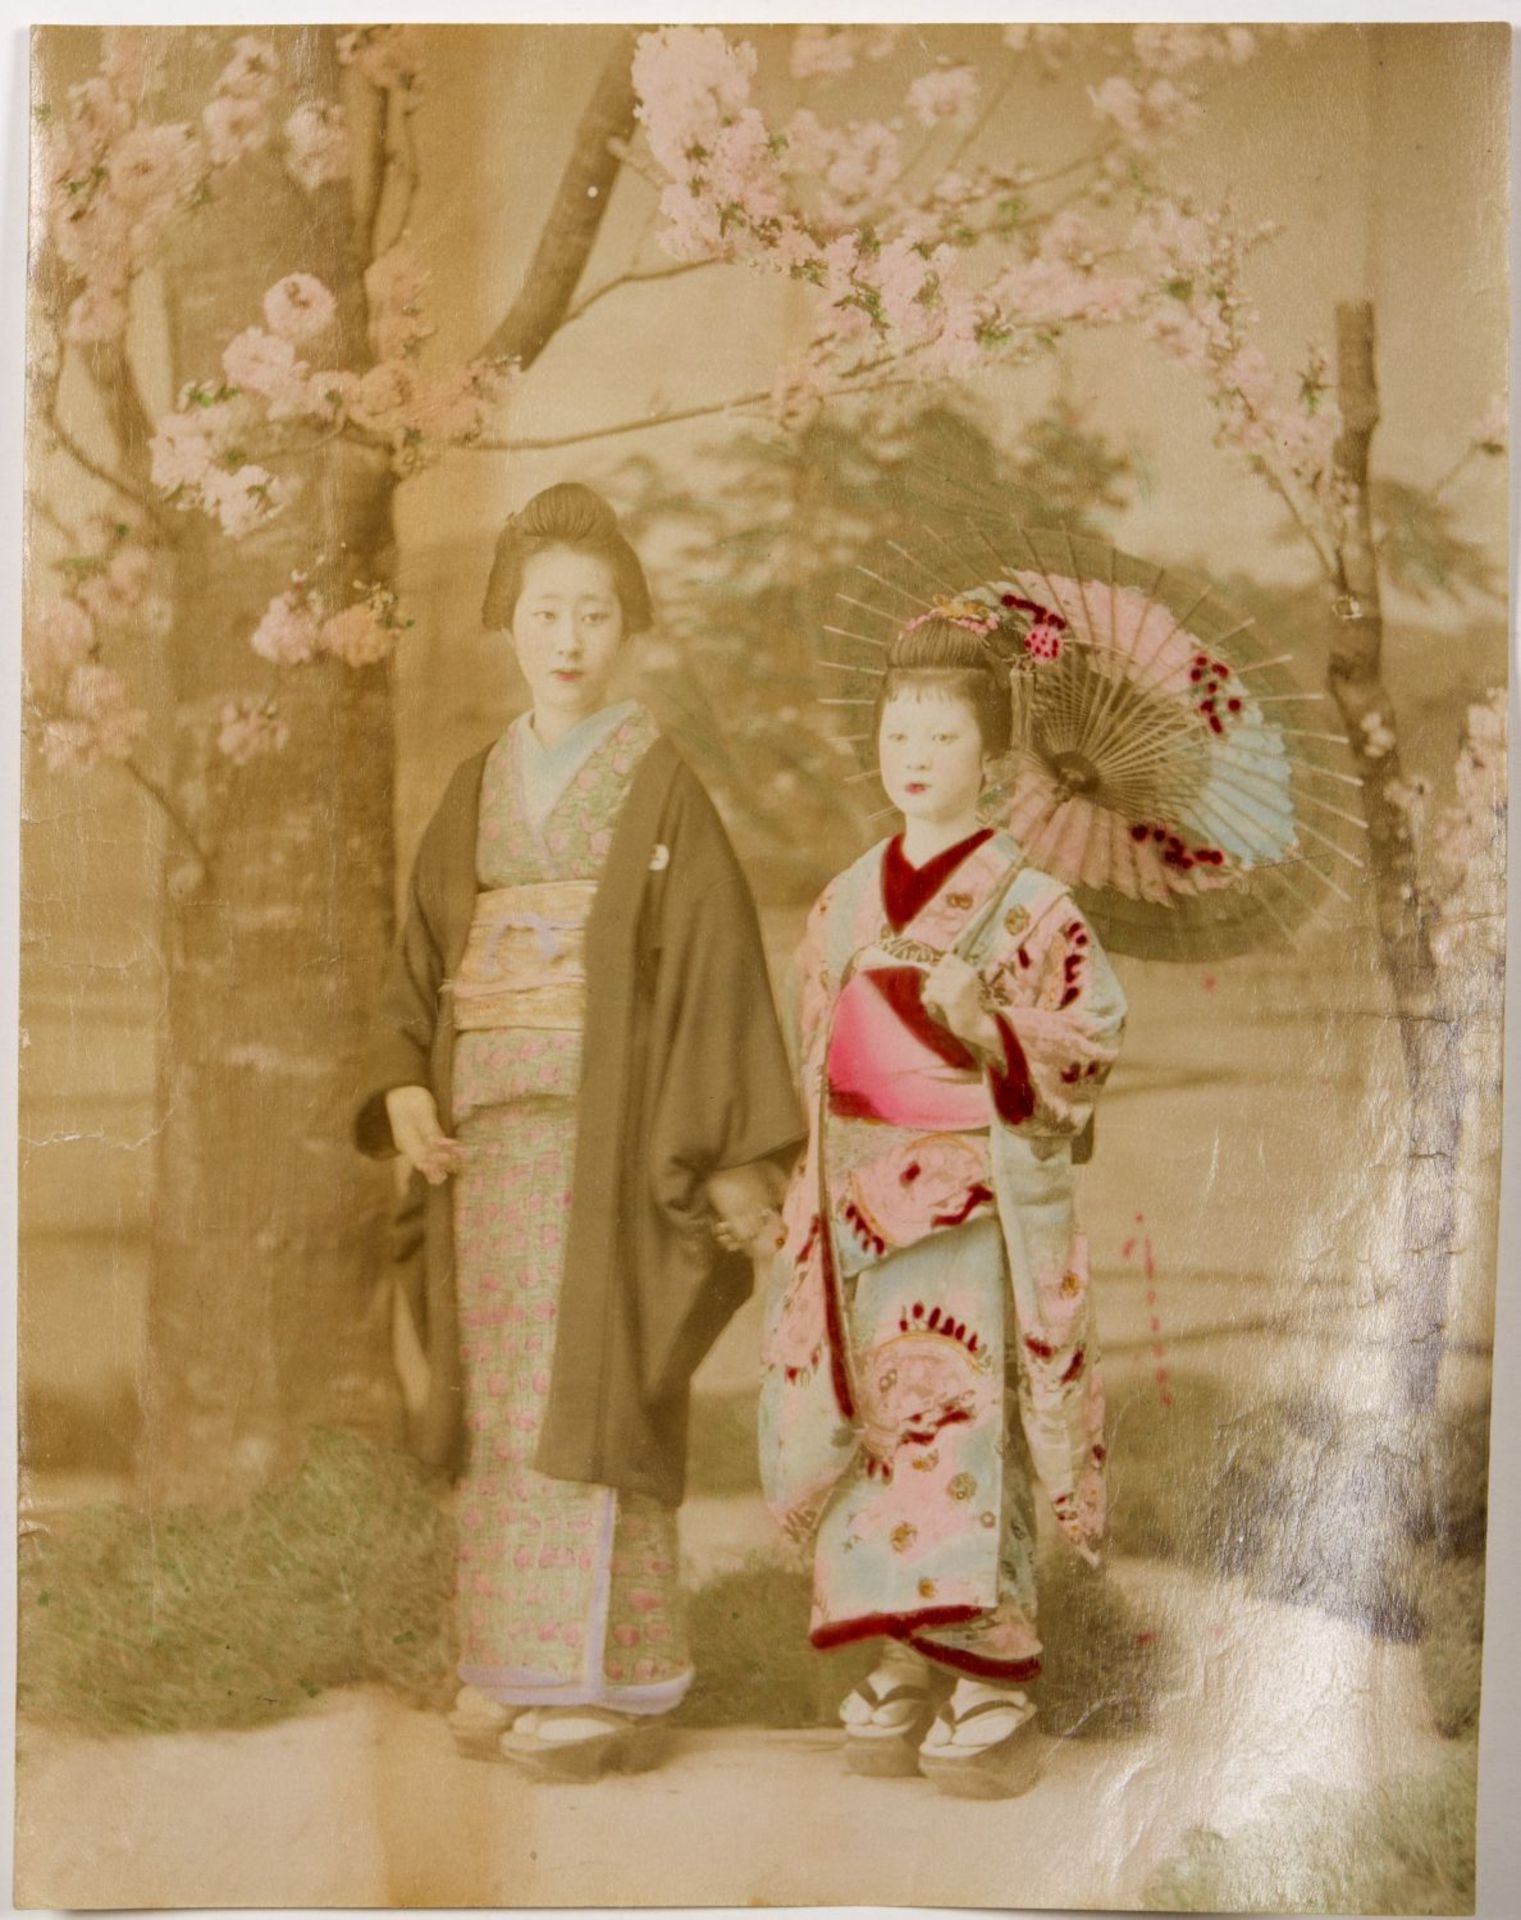 Fukasawa, T. Korbhändler. Osuwa-Tempel, Nagasaki. Tee-Haus von Arashiyama. Reisernte u.a. 20 Photogr - Bild 5 aus 5